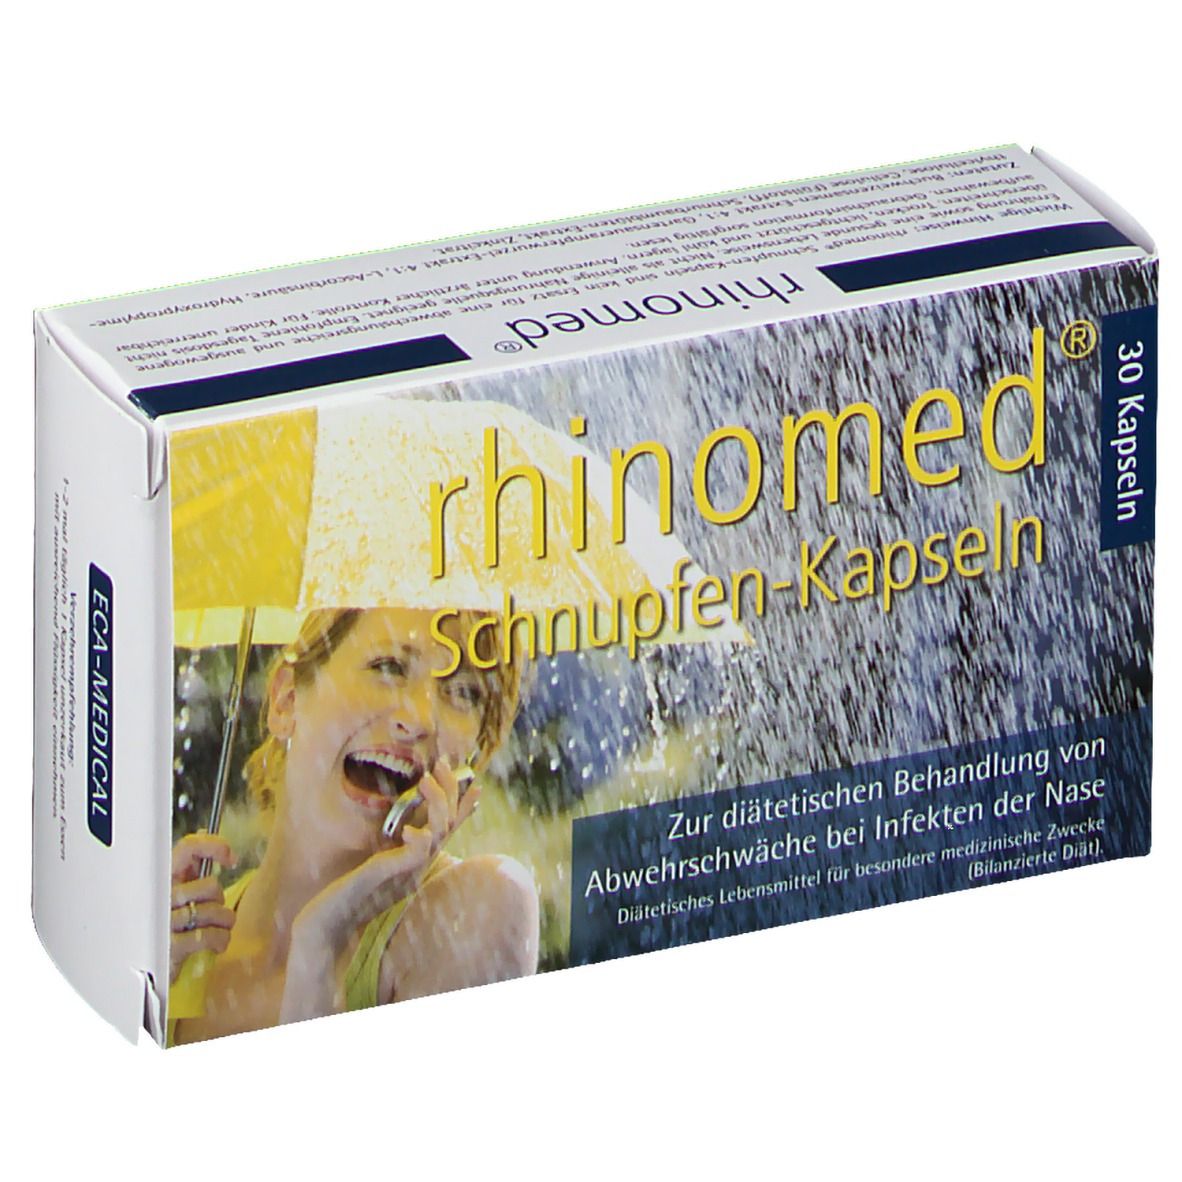 Rhinomed® Schnupfen-Kapseln